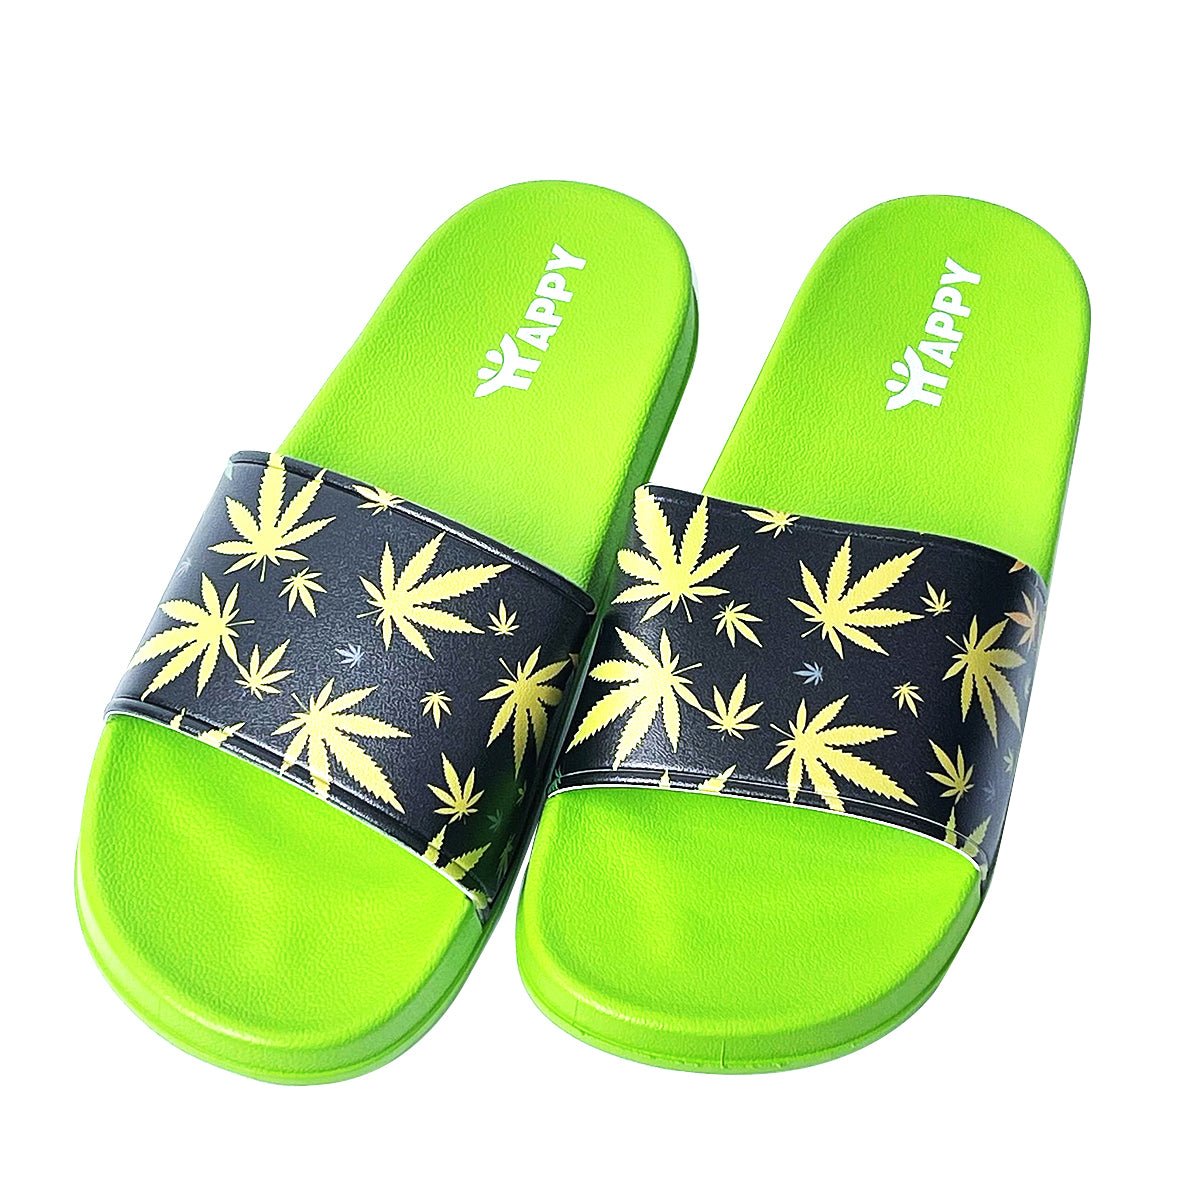 Green Weed Leaf Print Slide Sandals - Pack of 4 Sizes - 7, 9, 11, 12